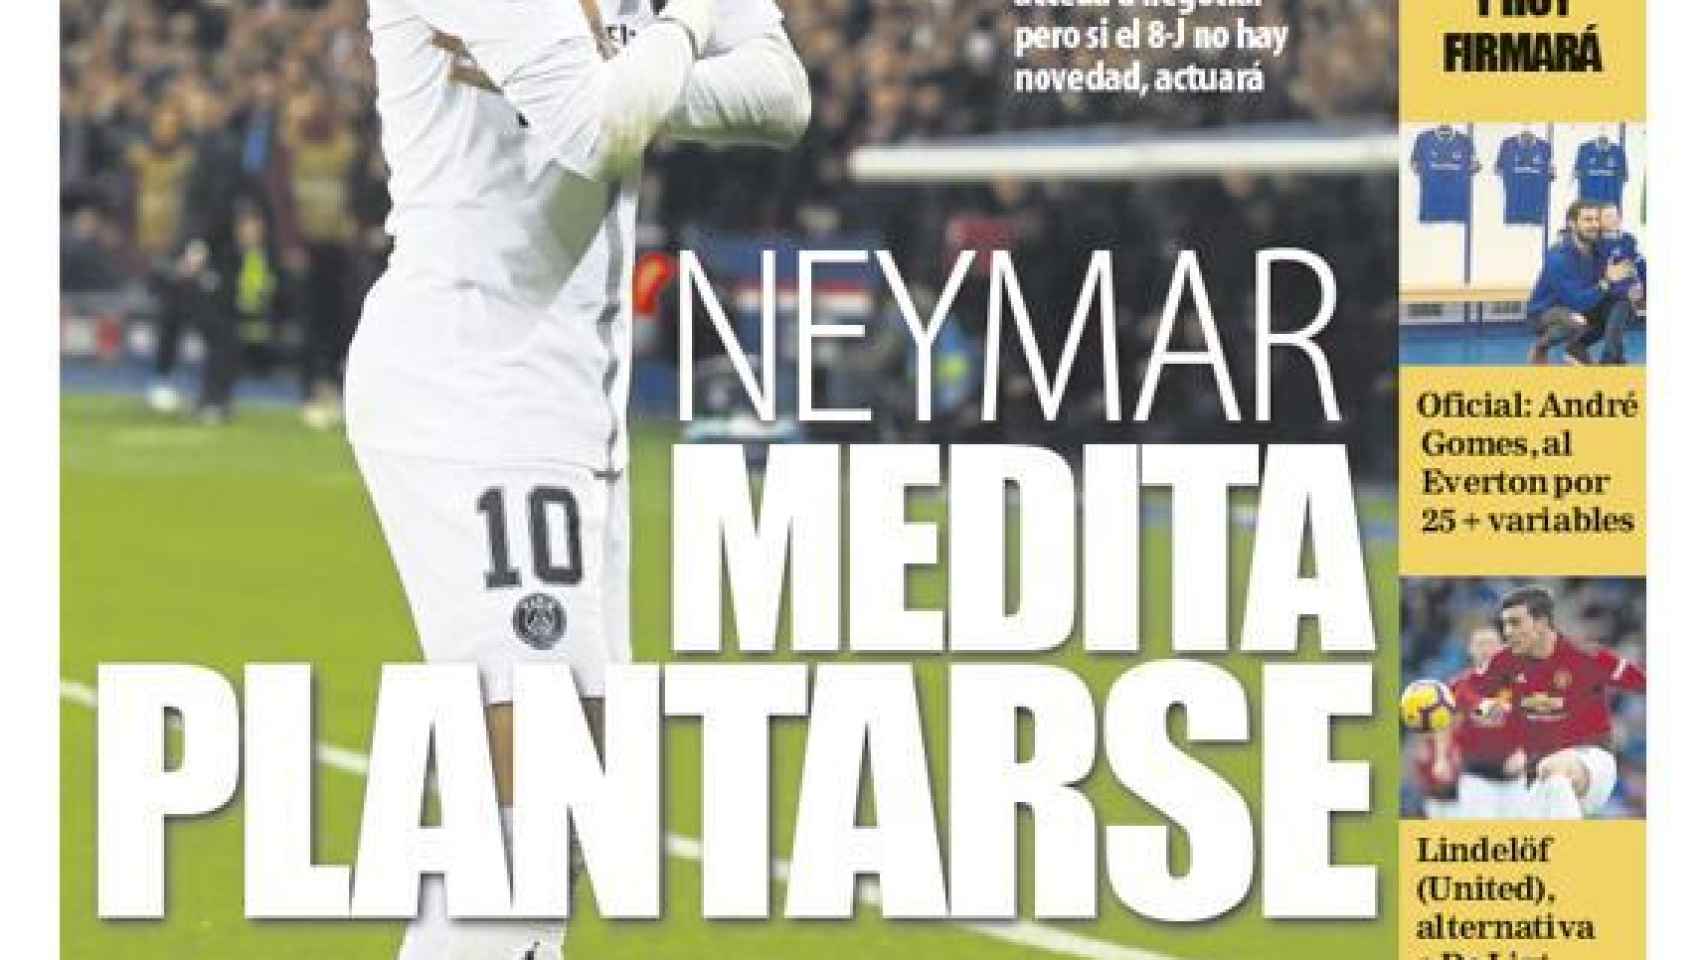 La portada del diario Mundo Deportivo (26/06/2019)1706 x 960